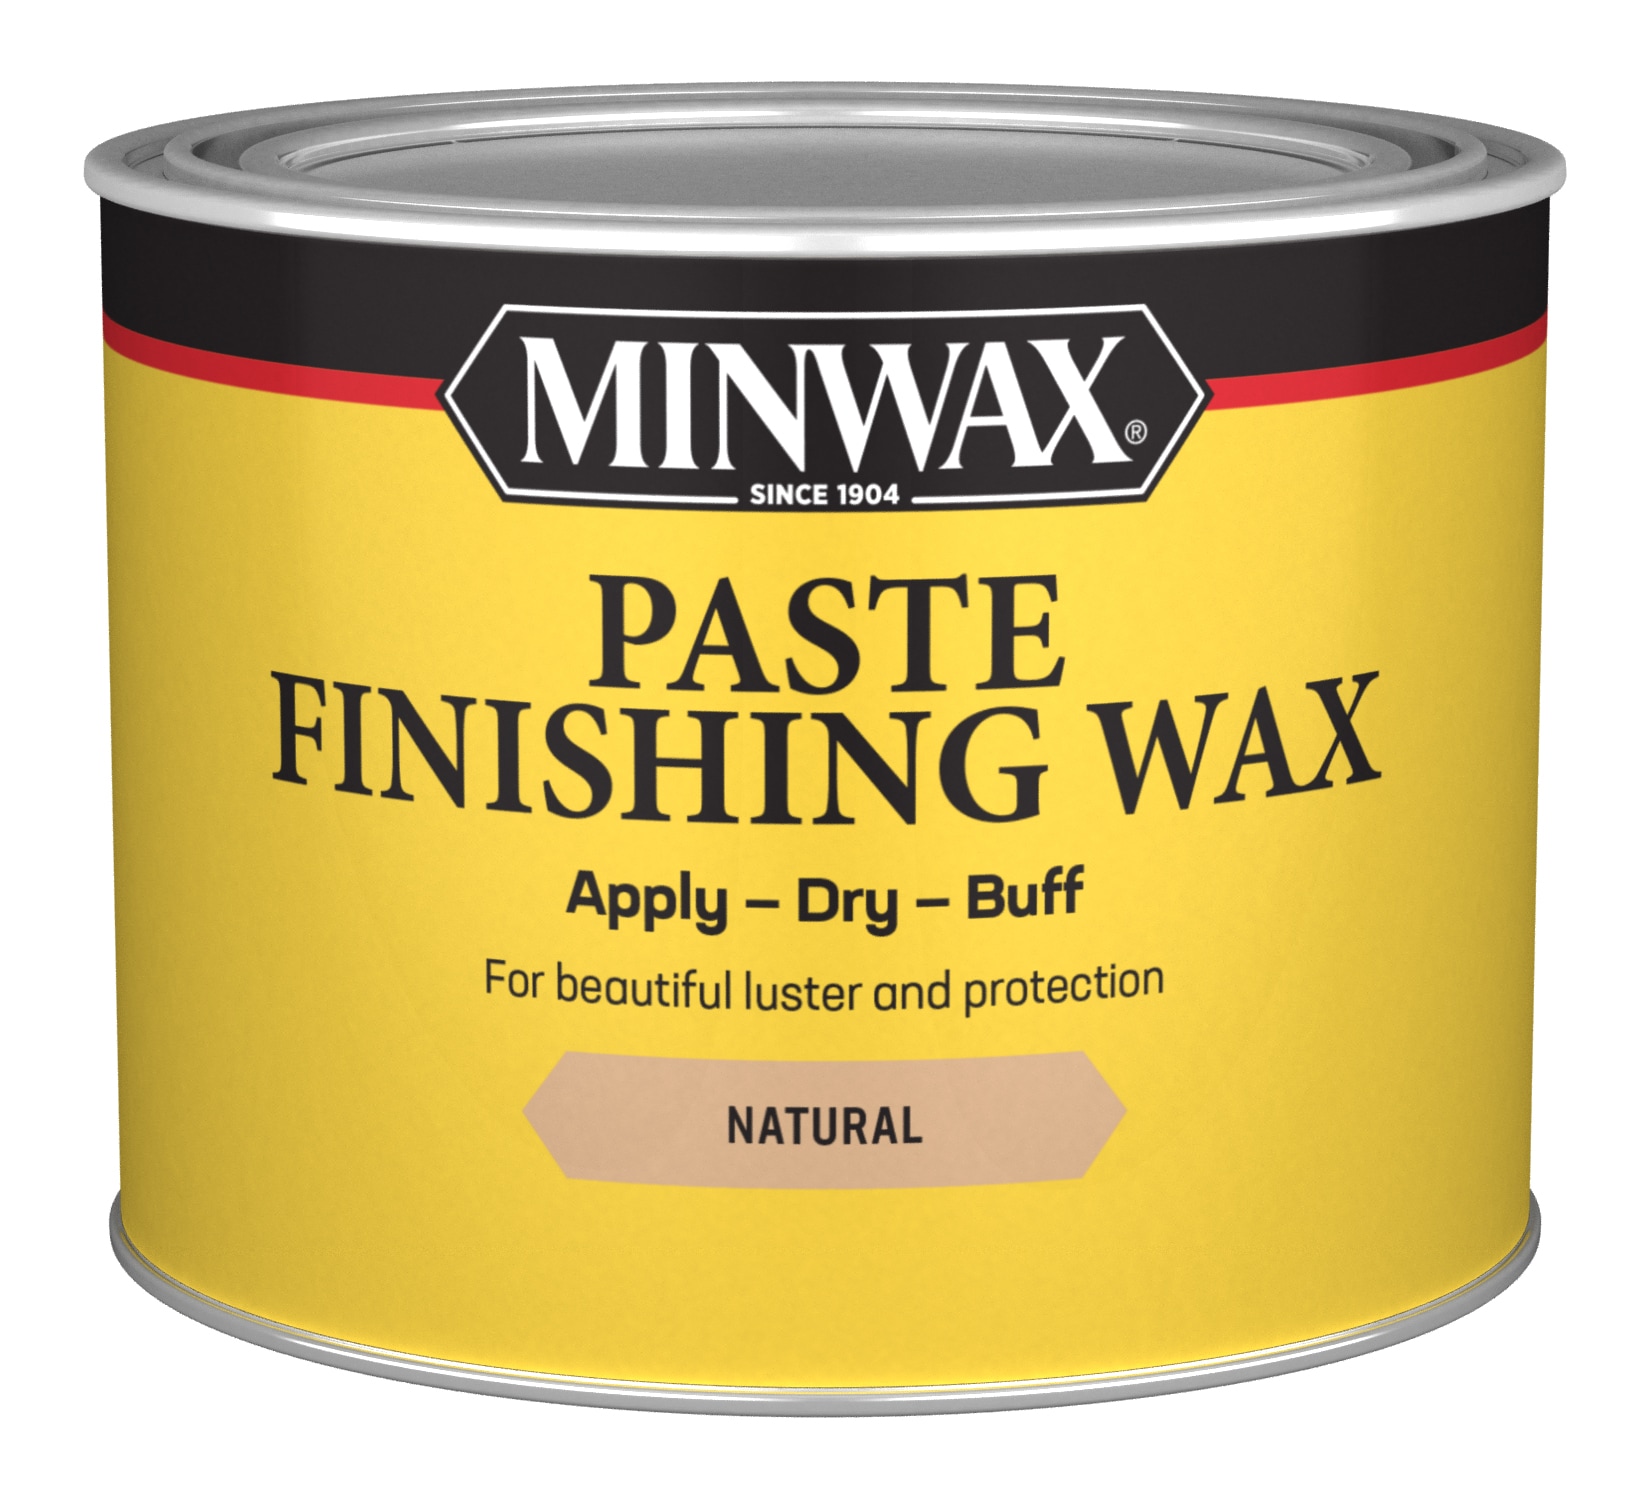 Paste wax